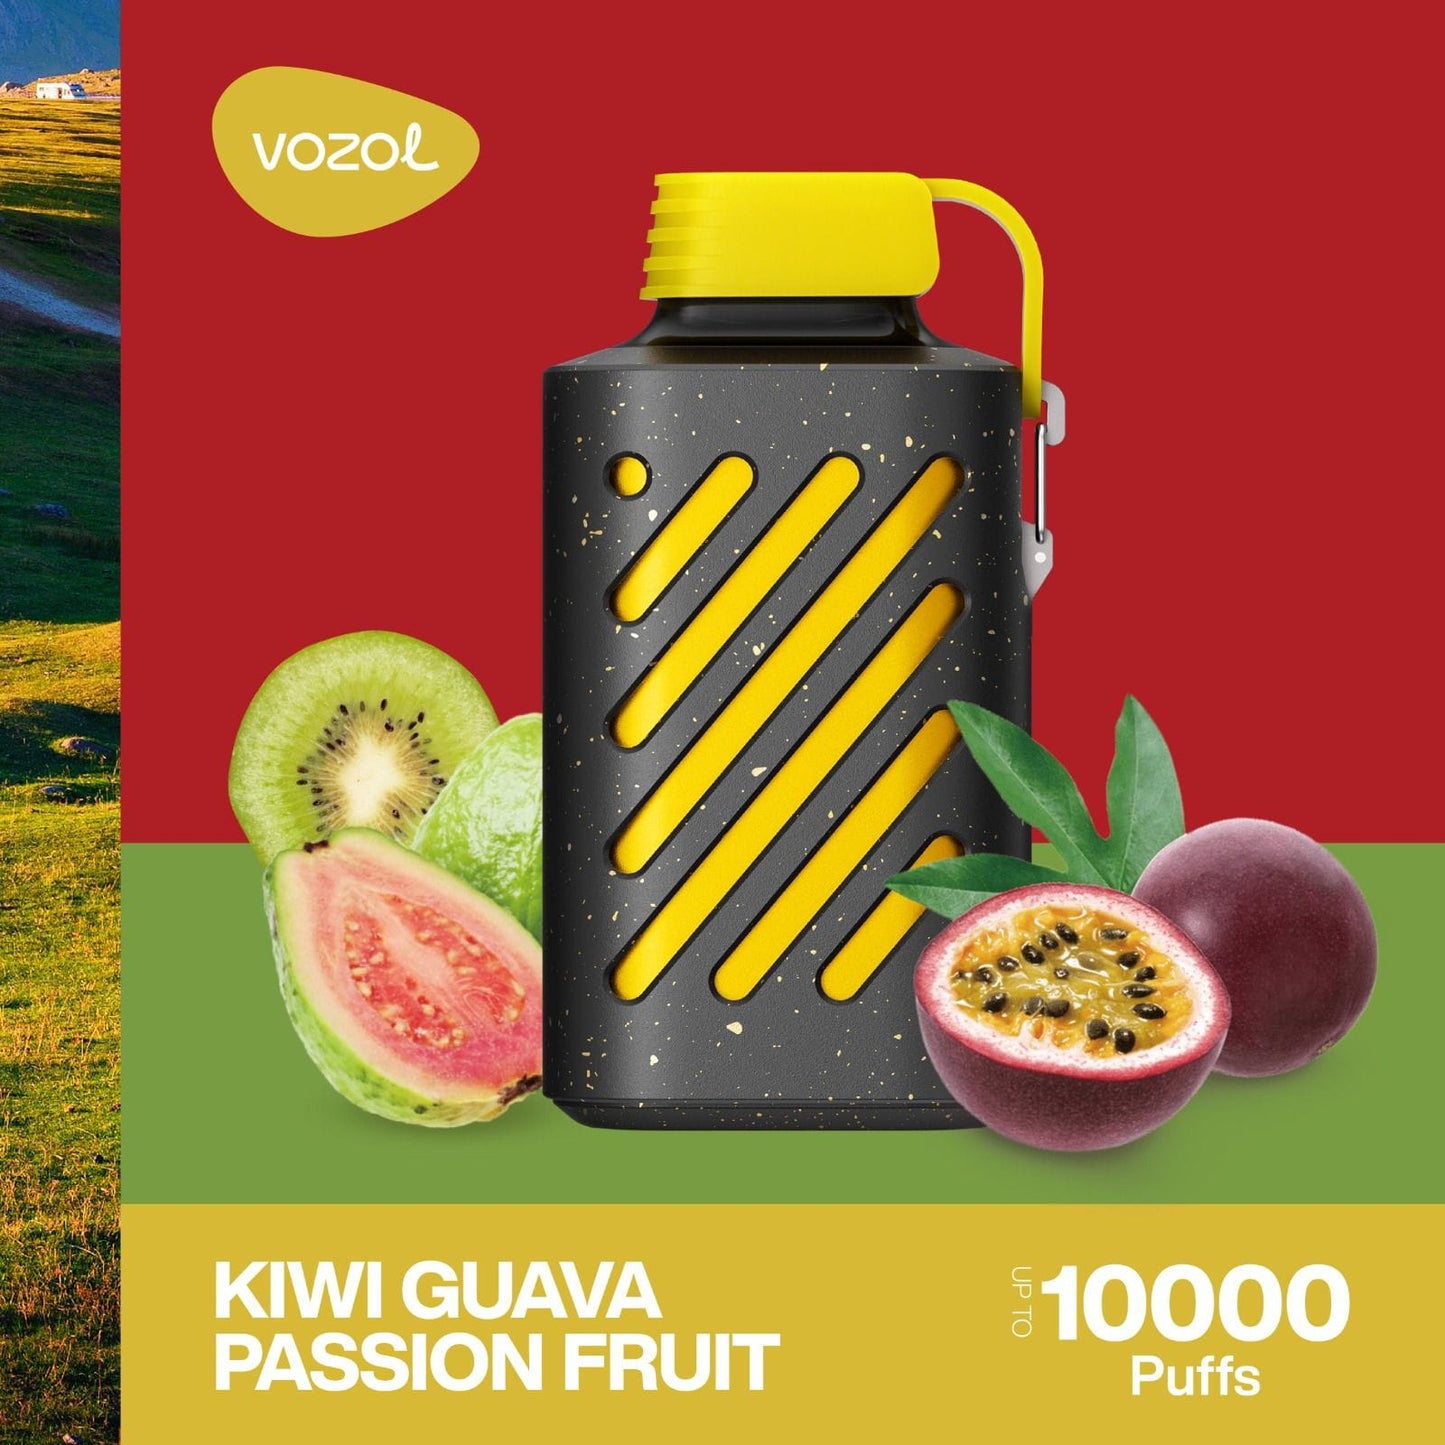 KIWI GUAVA PASSION FRUIT